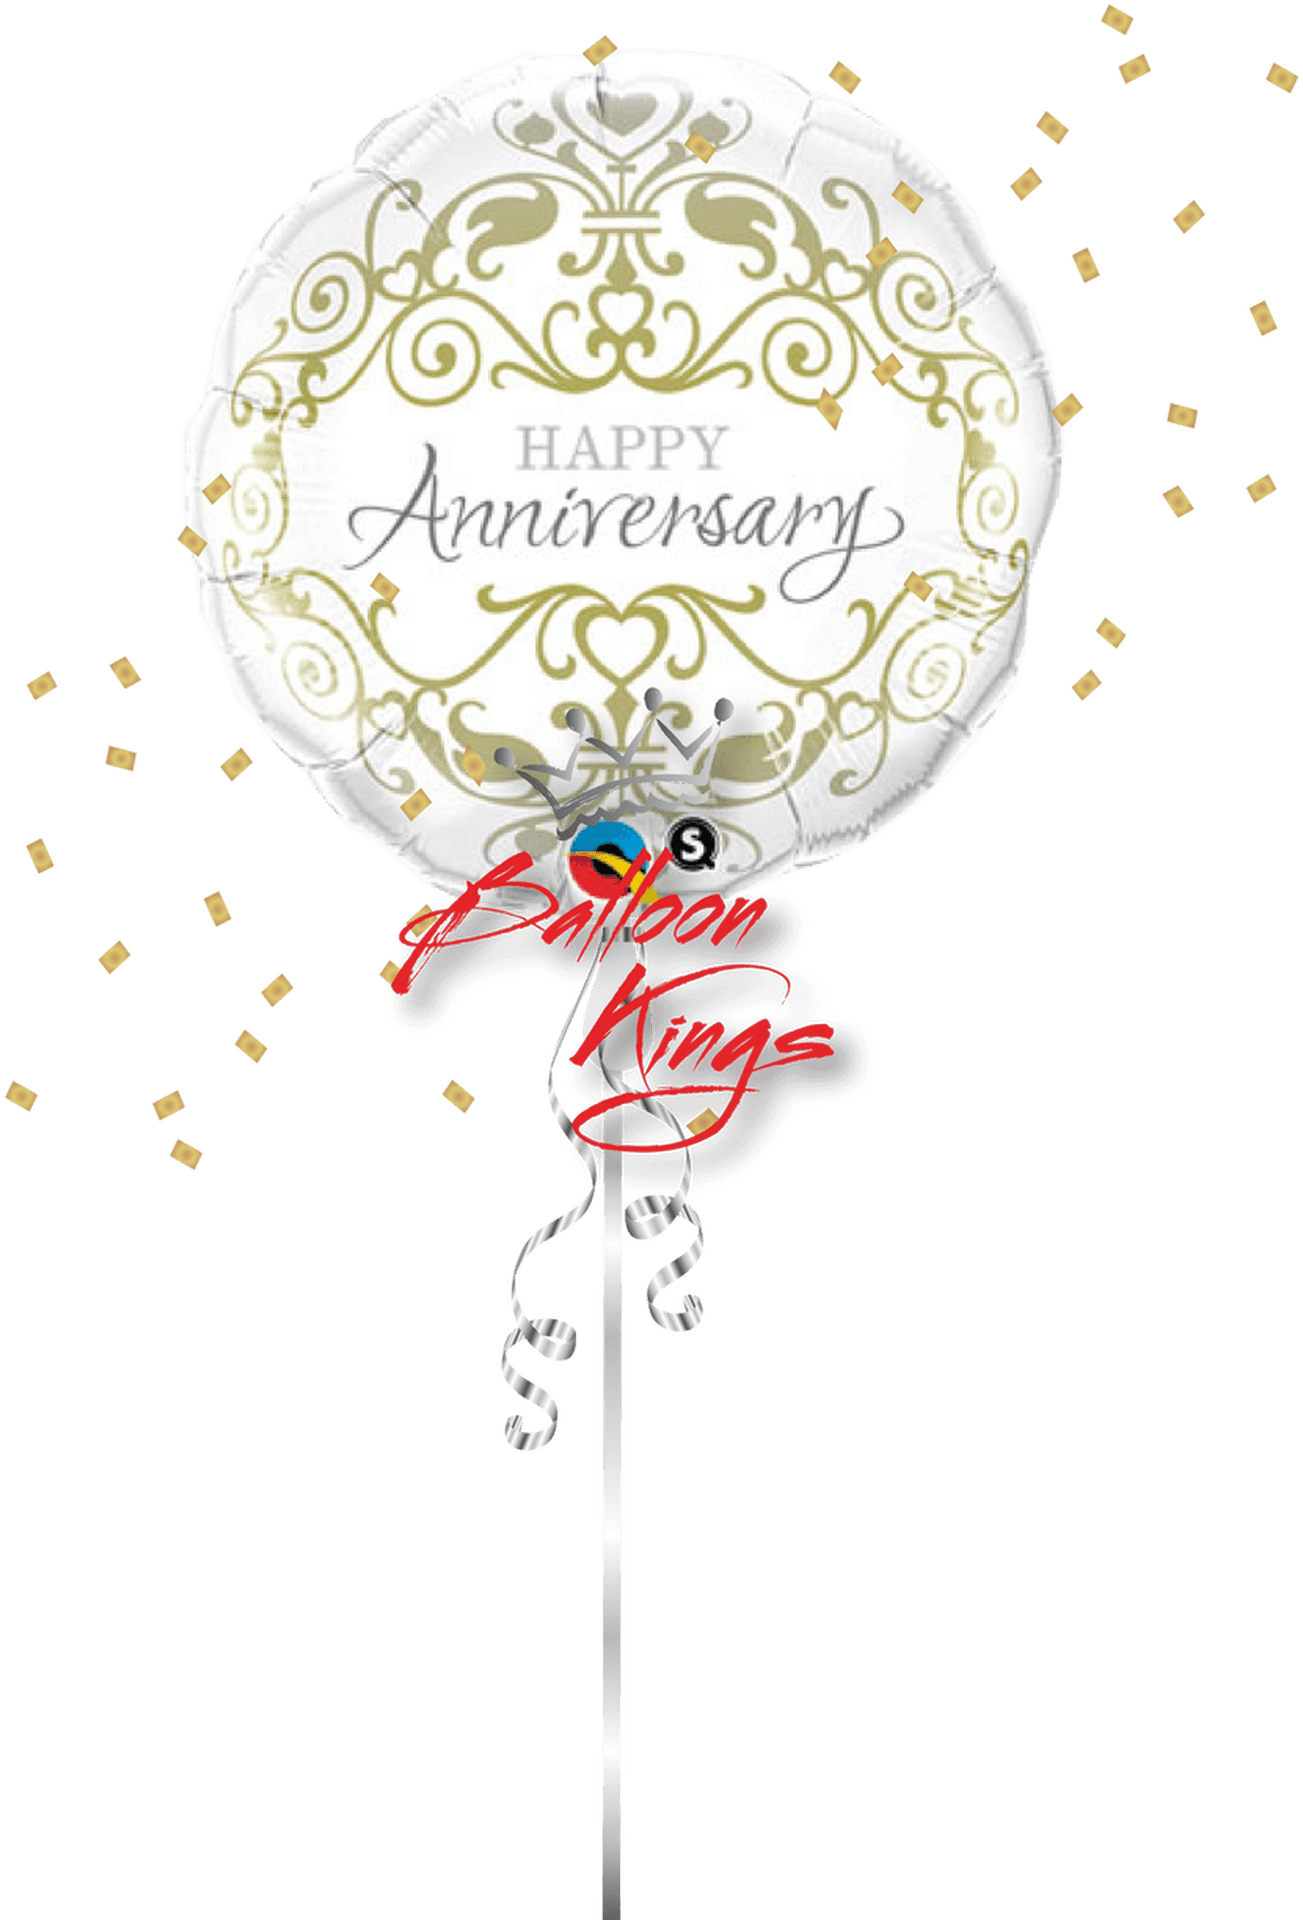 Happy Anniversary Balloon Celebration PNG image